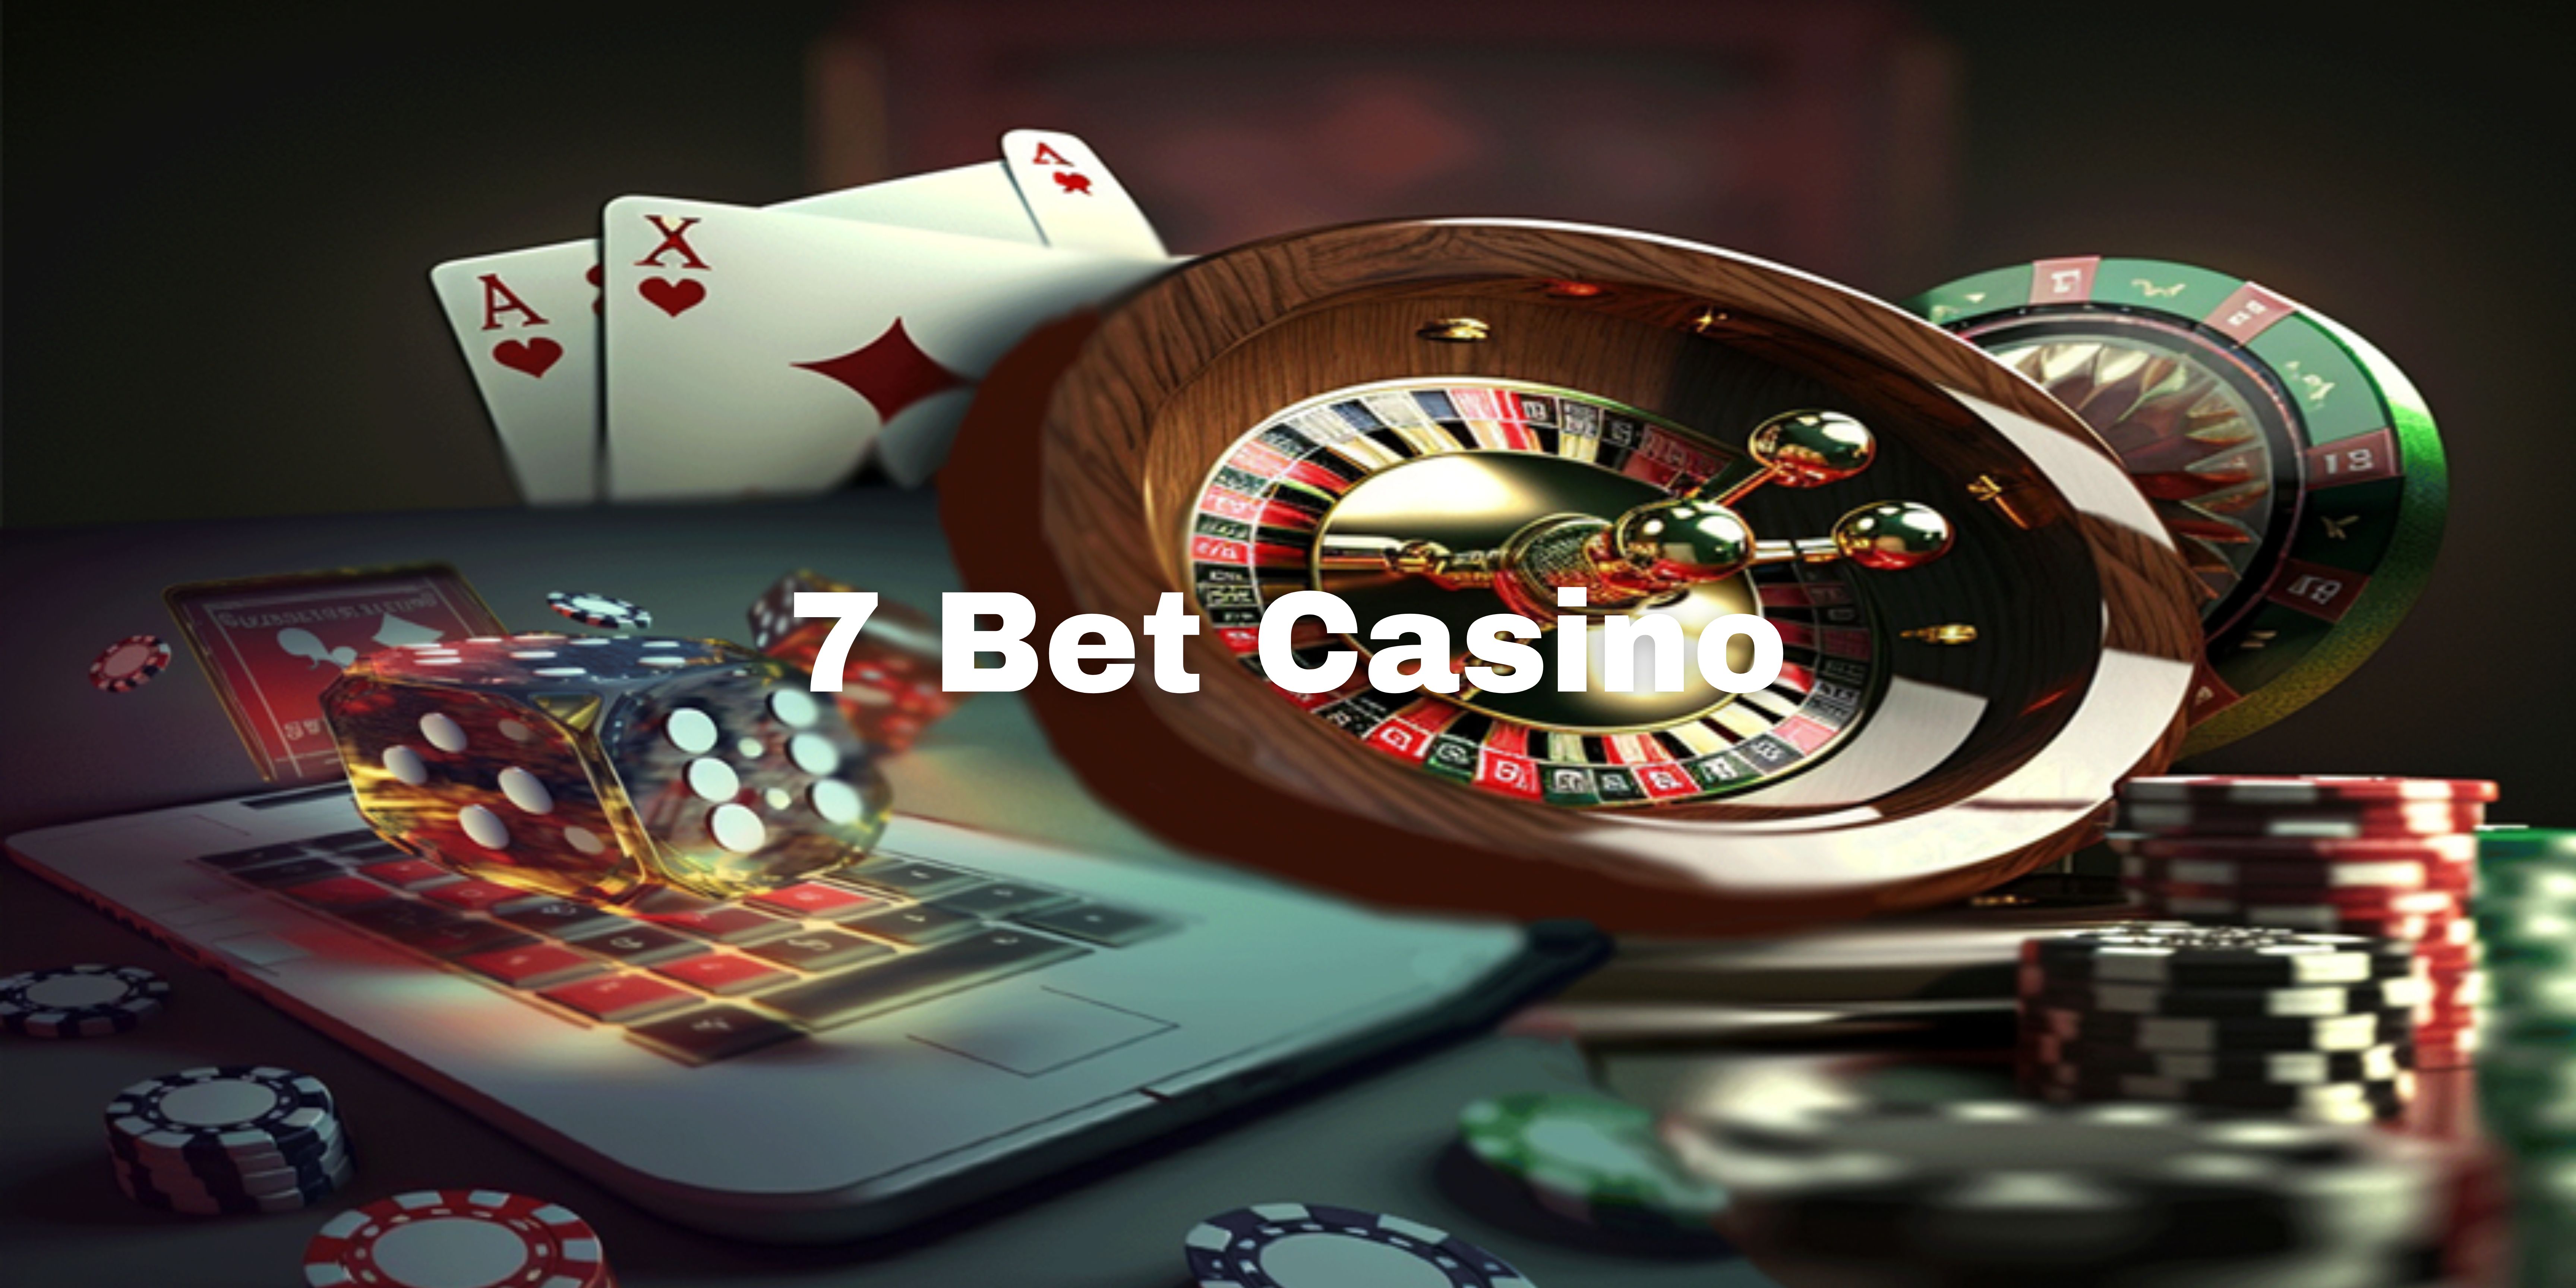 7 Bet Casino